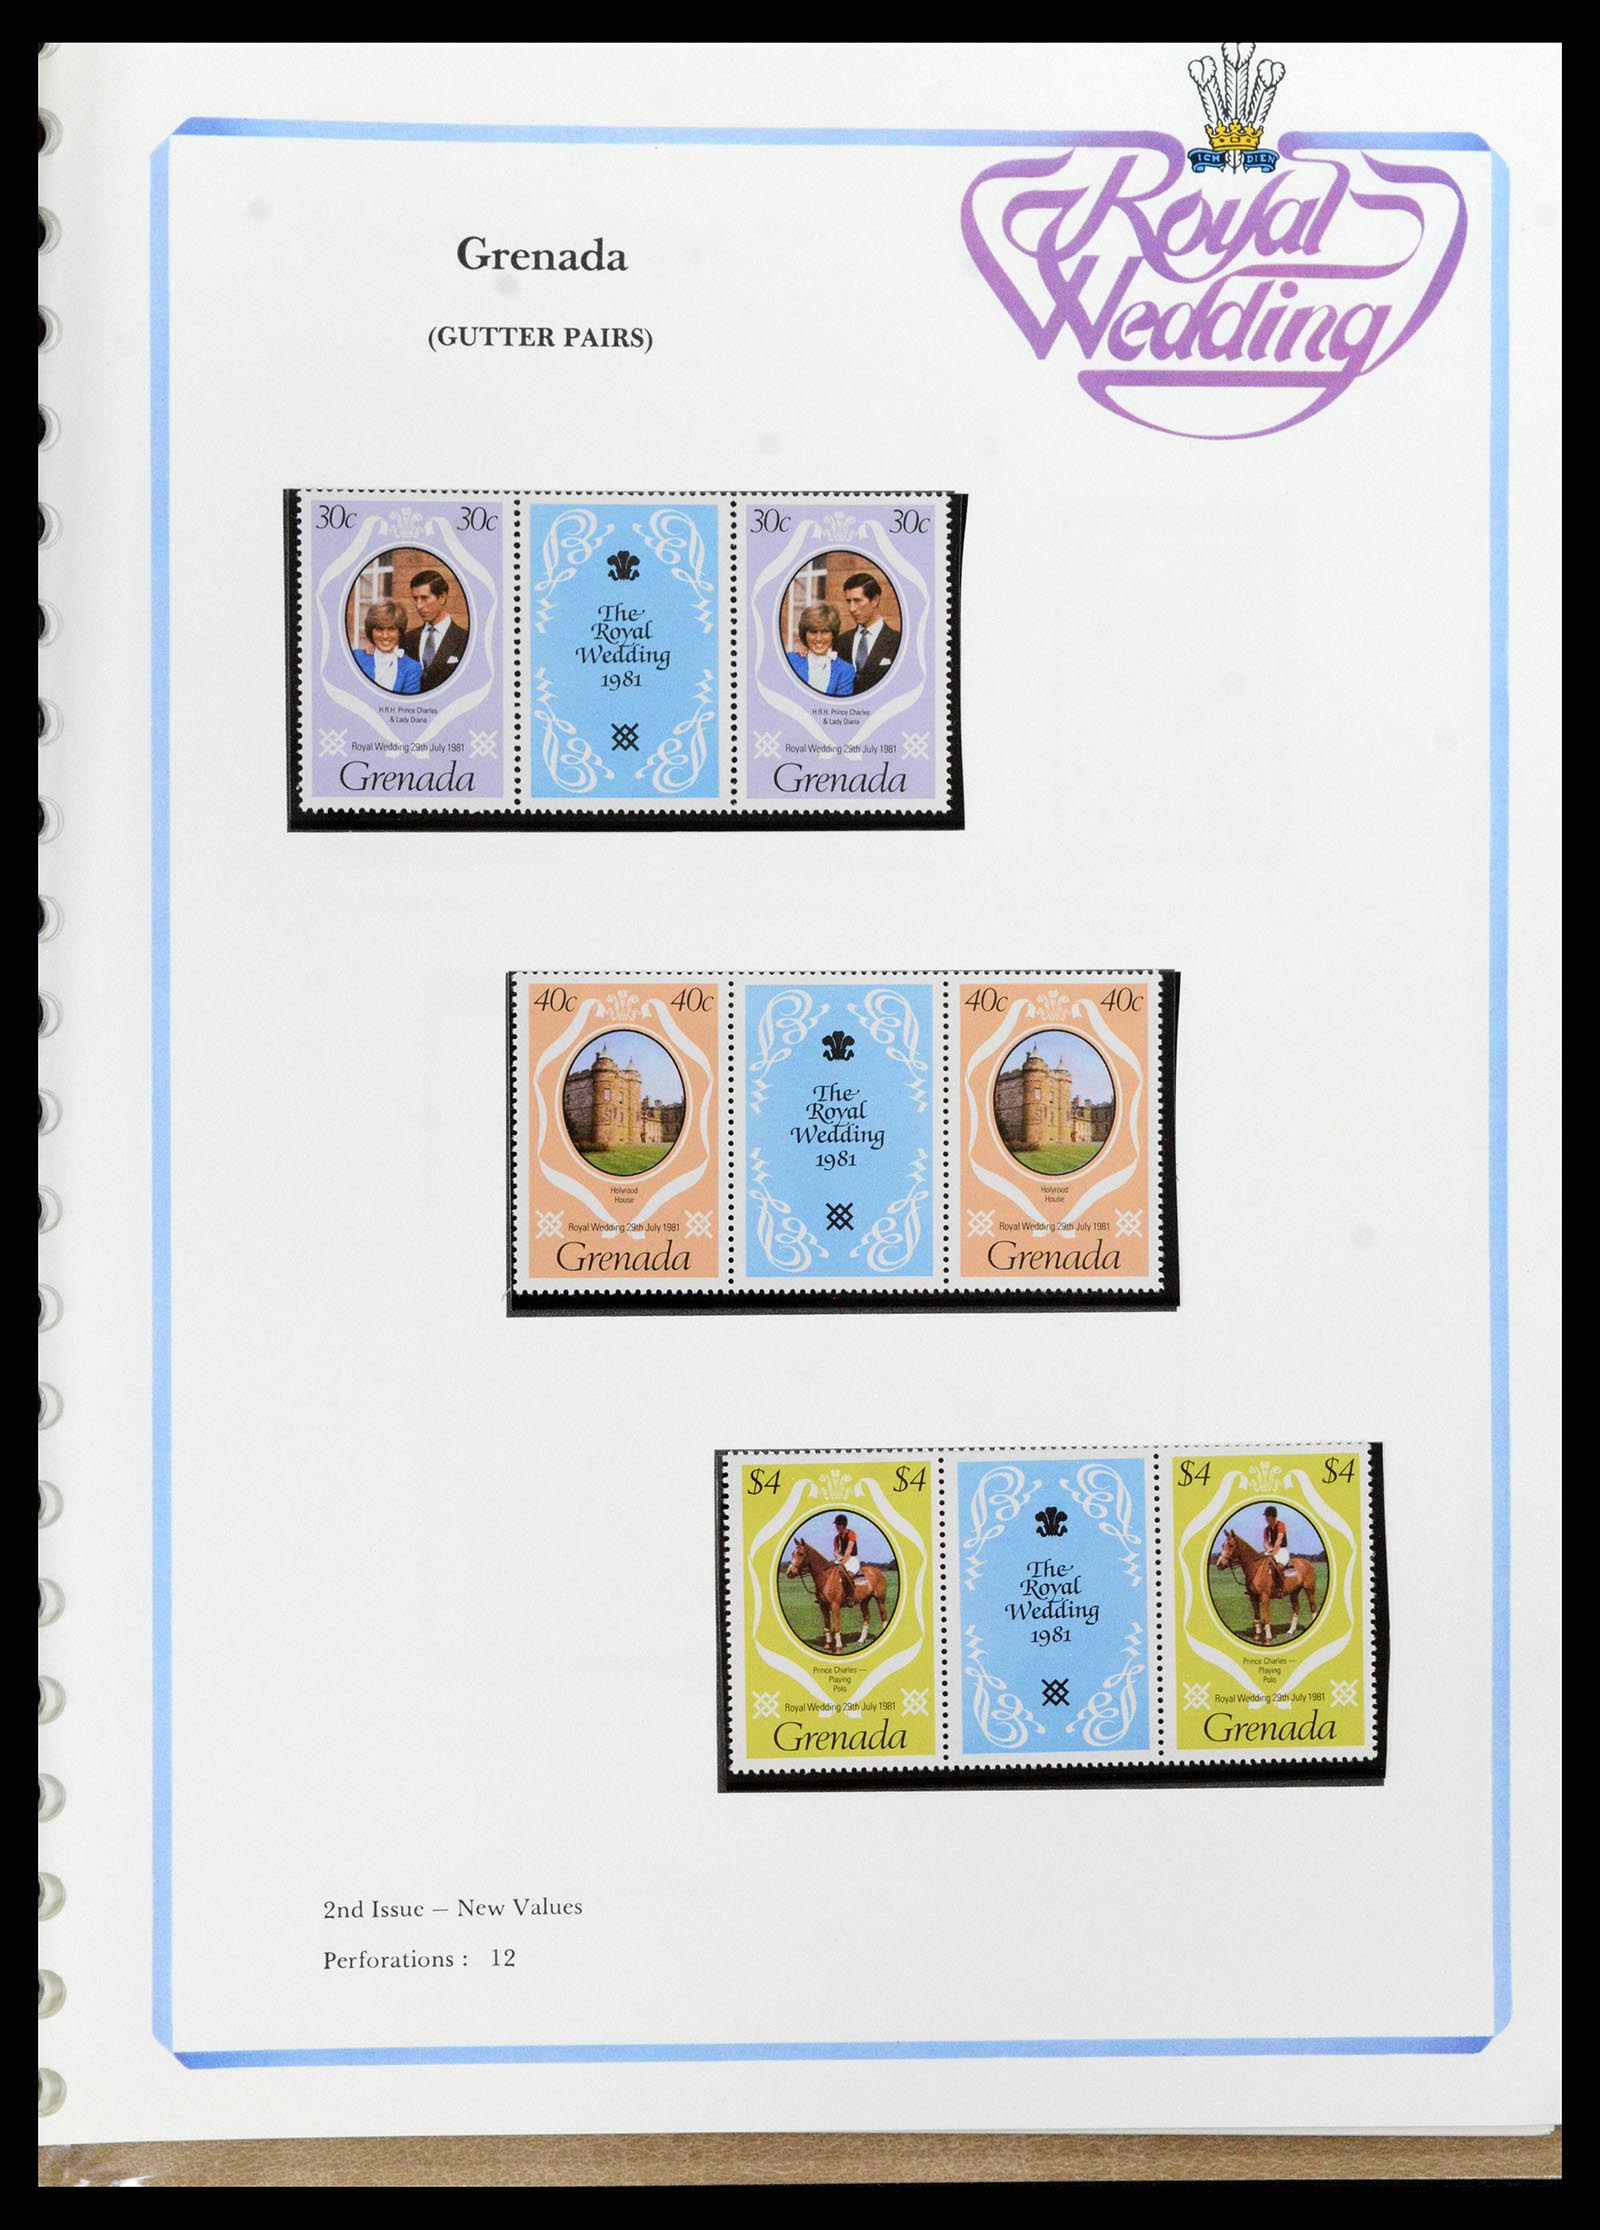 37818 067 - Stamp Collection 37818 Royal Wedding 1981.